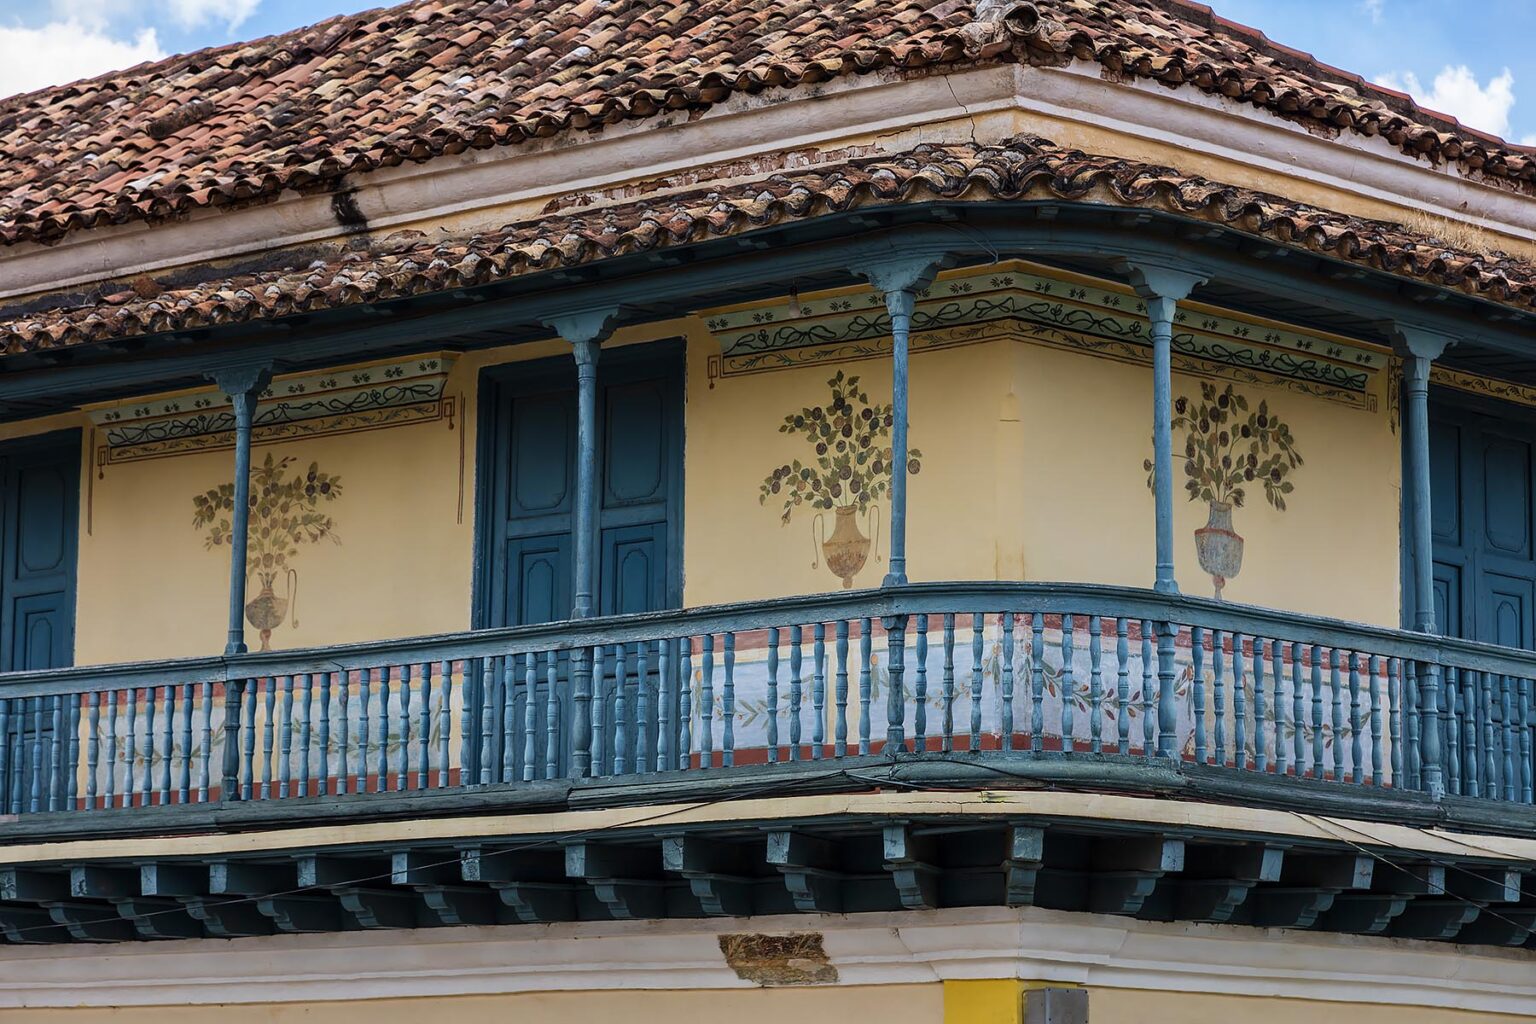 The GALLERIA DE ARTE is housed in a historic building on the PLAZA MAYOR - TRINIDAD, CUBA